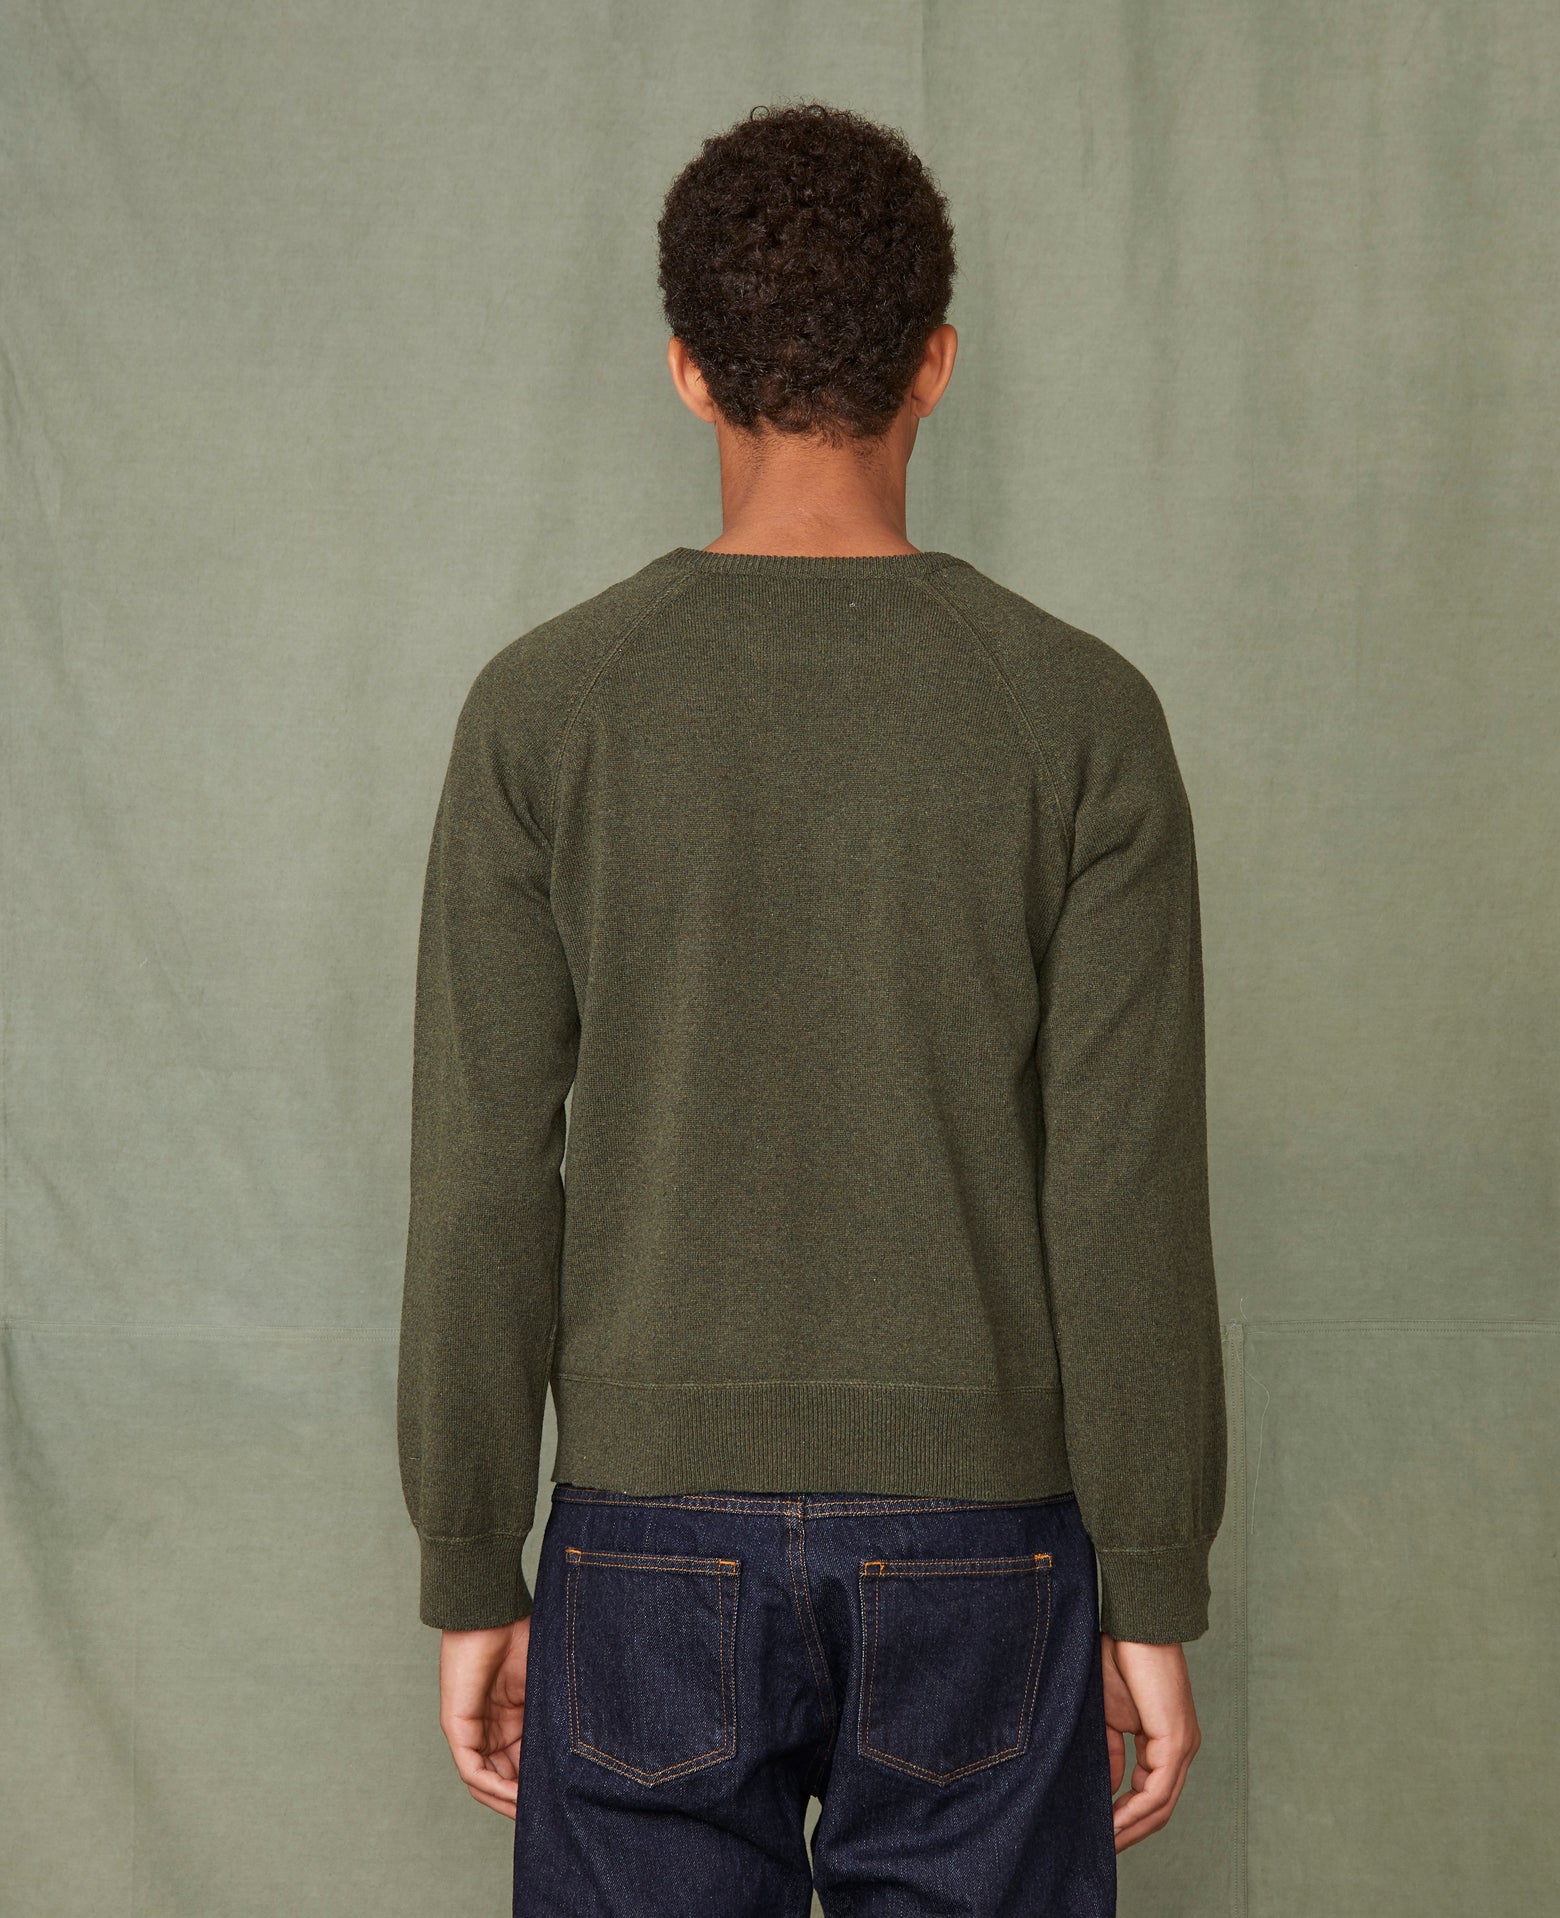 Nate sweater - Image 5